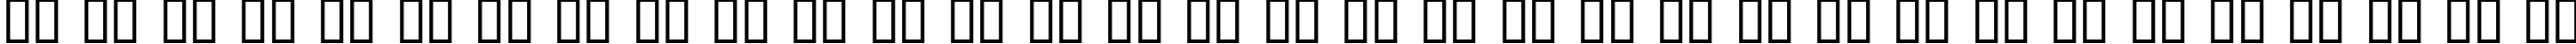 Пример написания русского алфавита шрифтом AteUpWithDumbAss